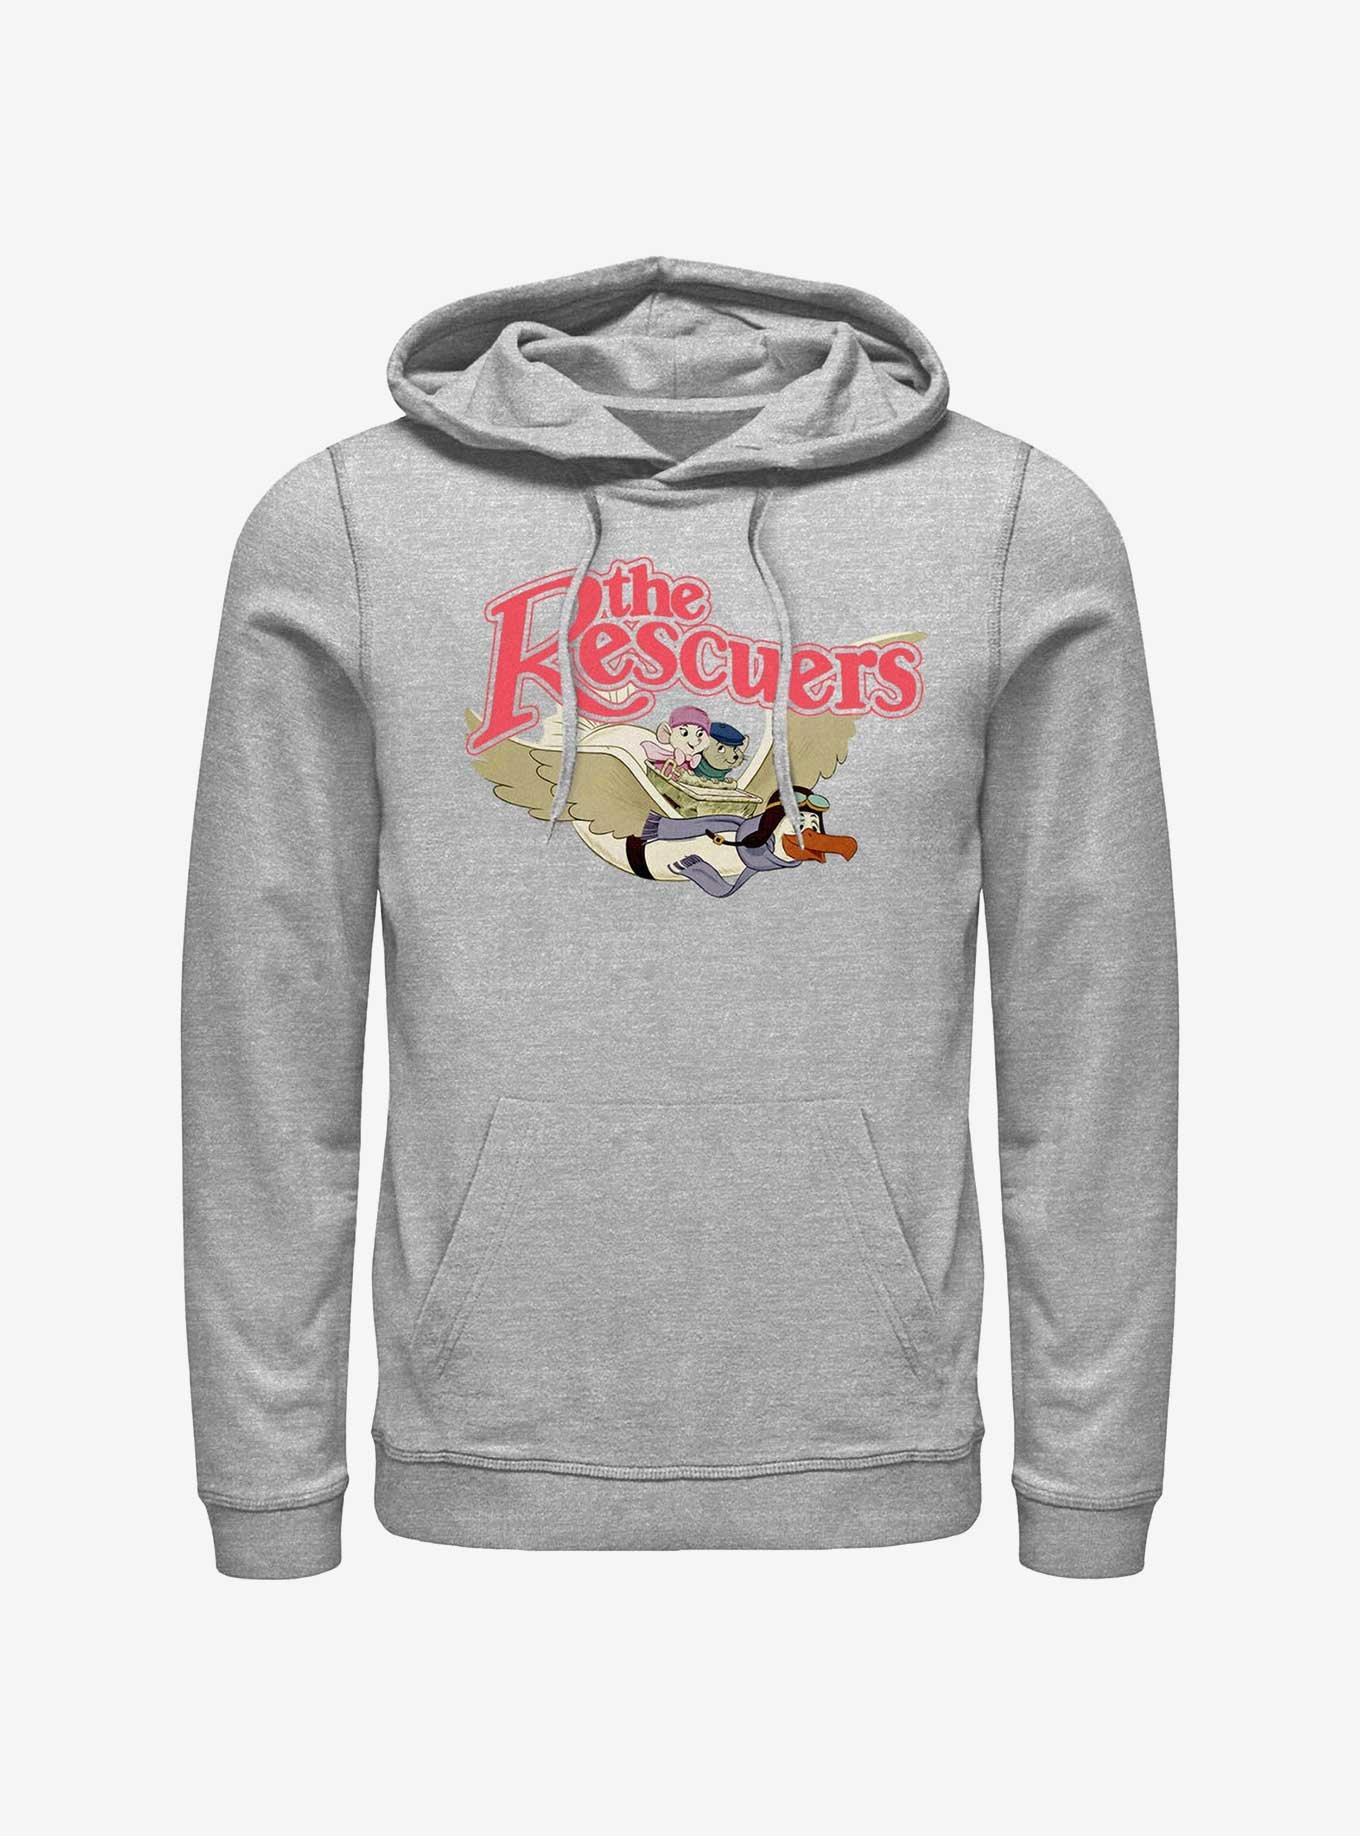 Disney The Rescuers Down Under Logo Sweatshirt